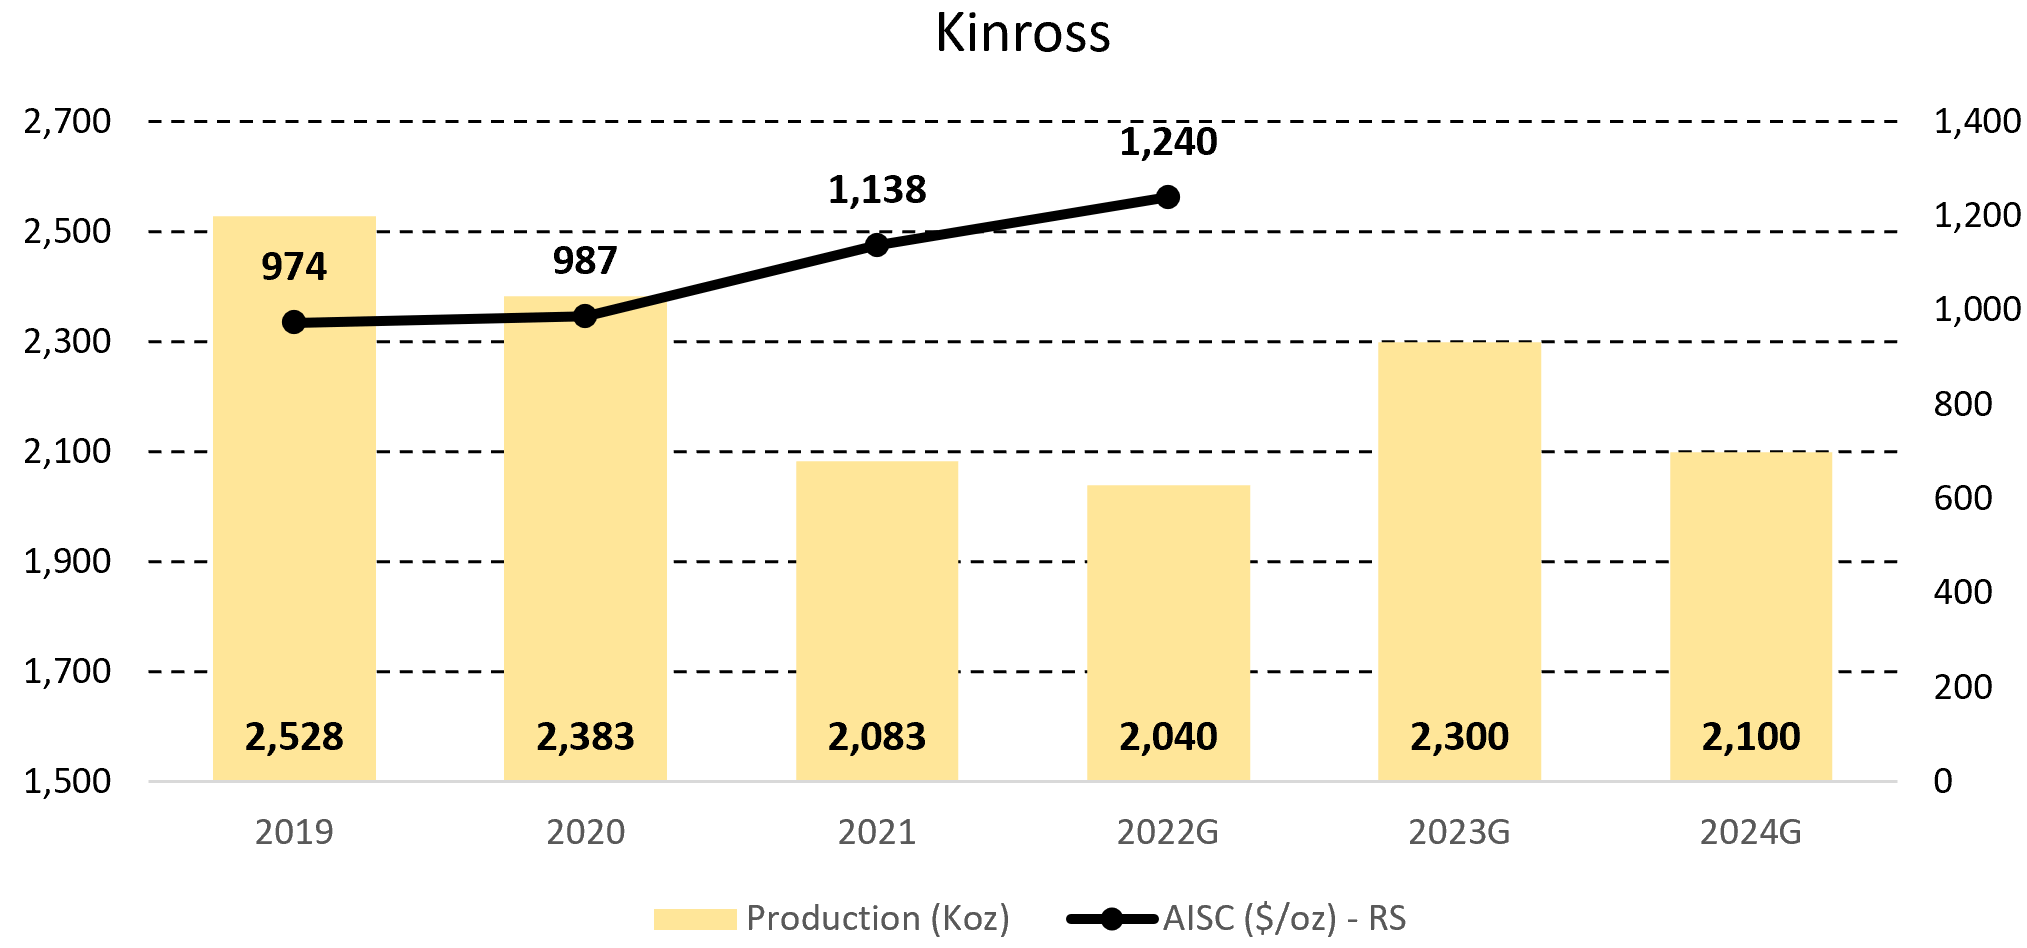 Figure 7 - Source: Kinross Quarterly Reports